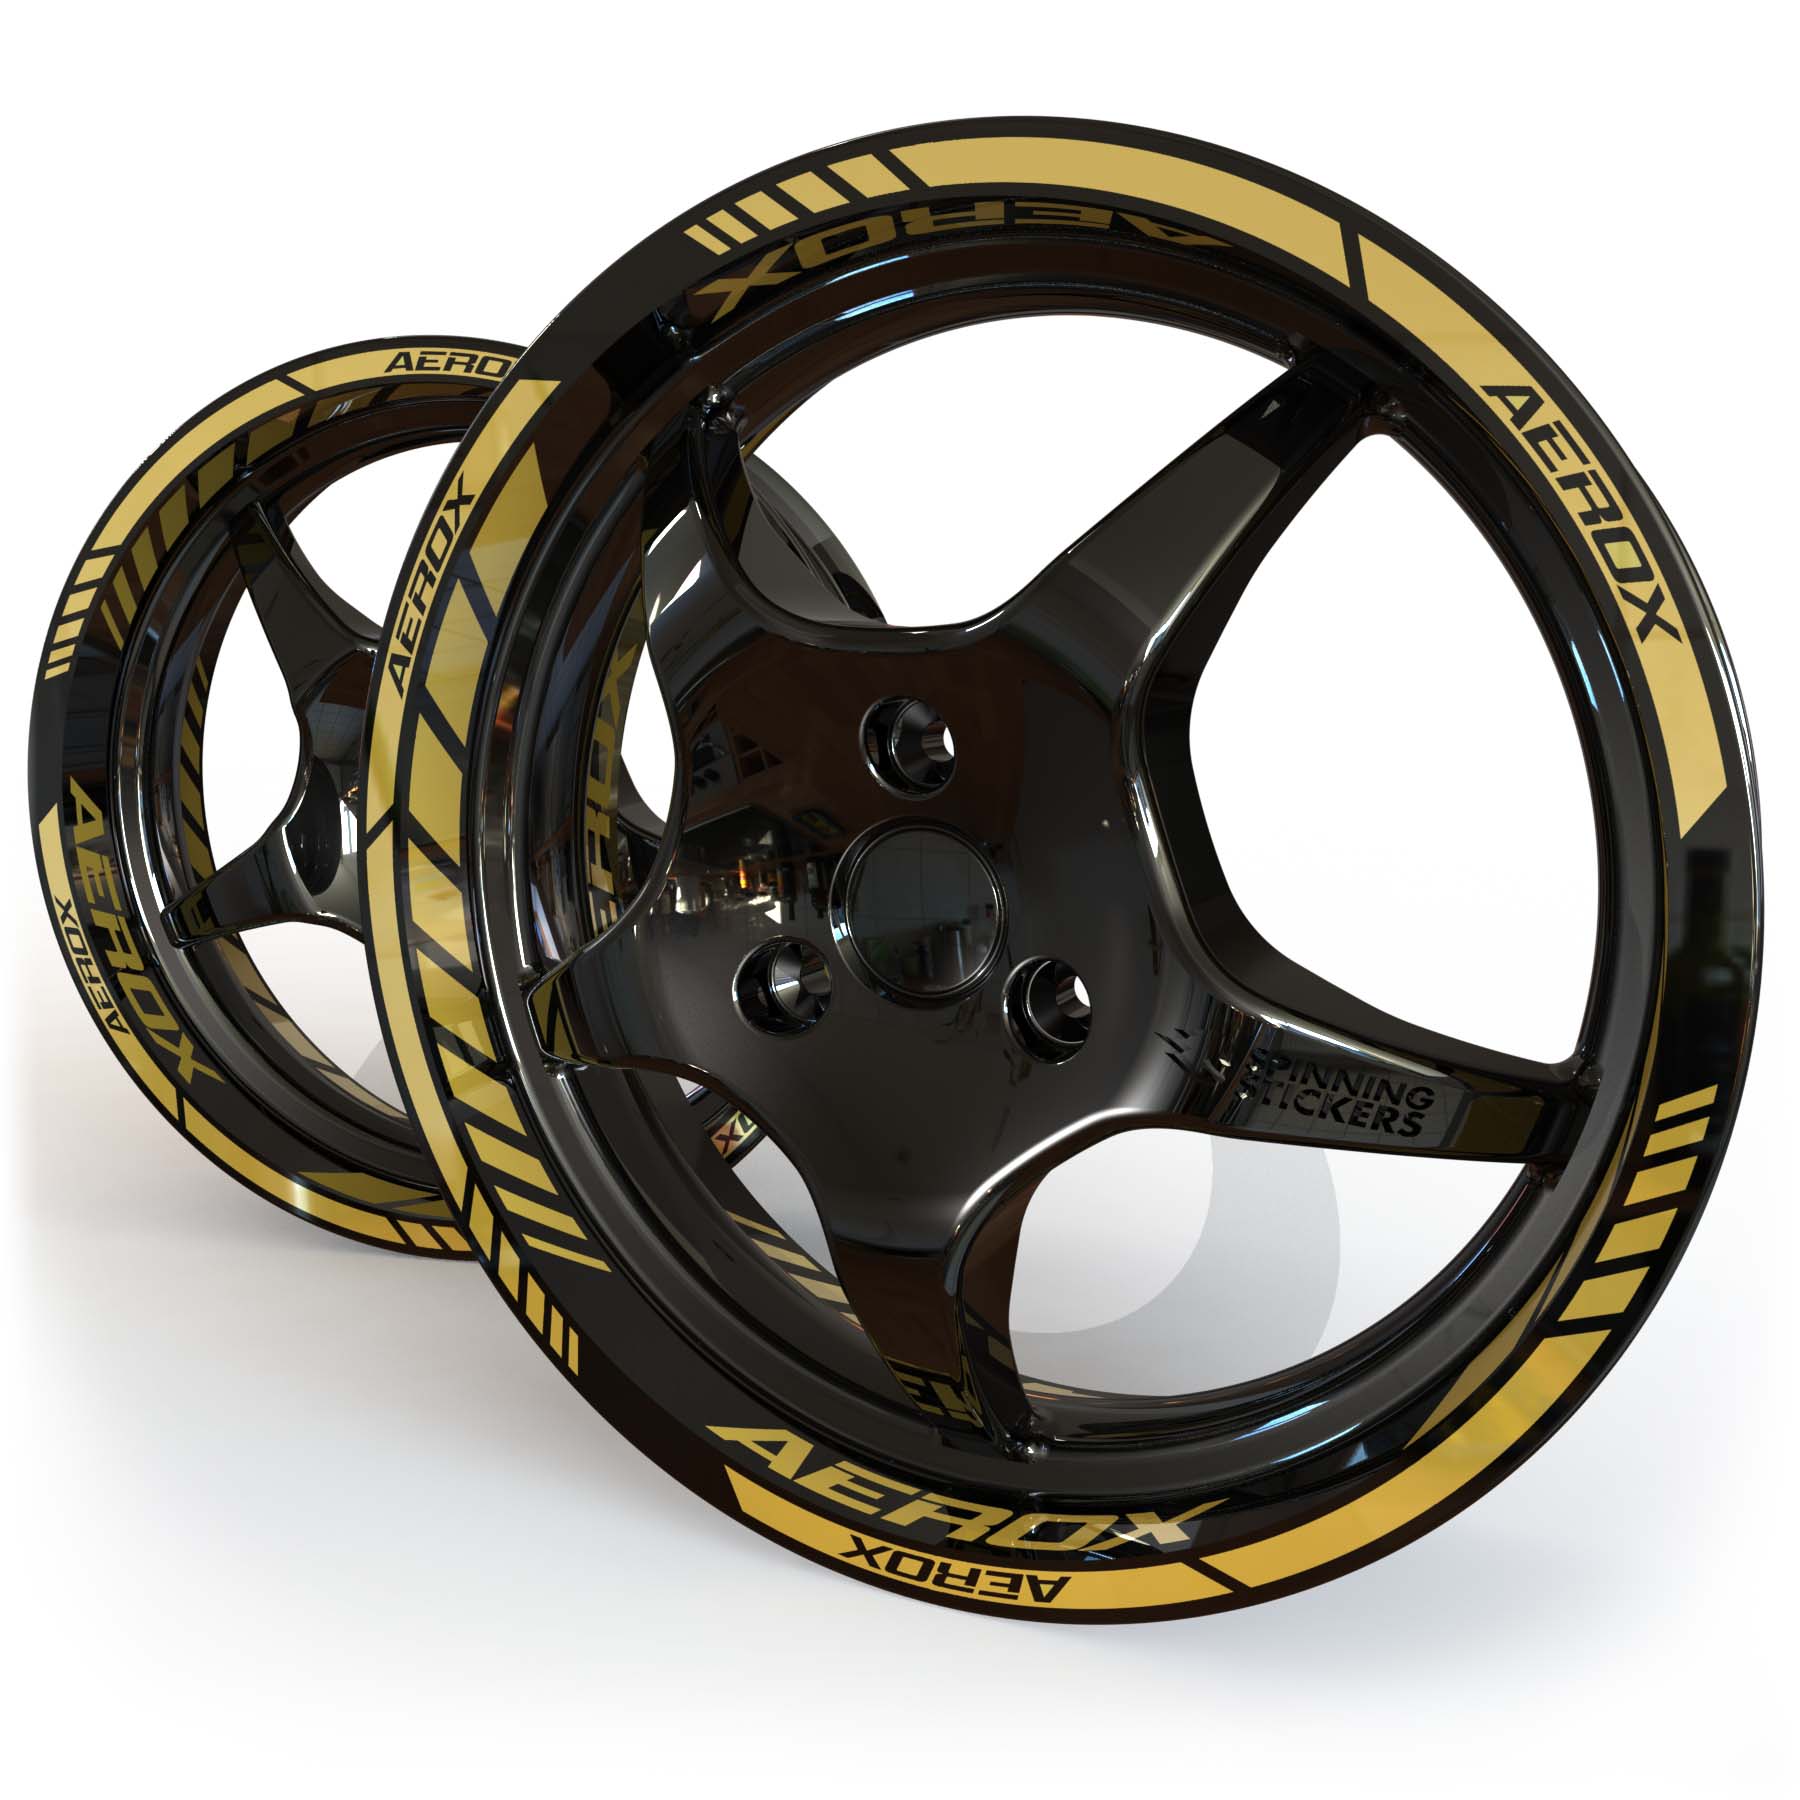 Metallic gold Yamaha Aerox wheel stickers on a black 12 inch moped rim